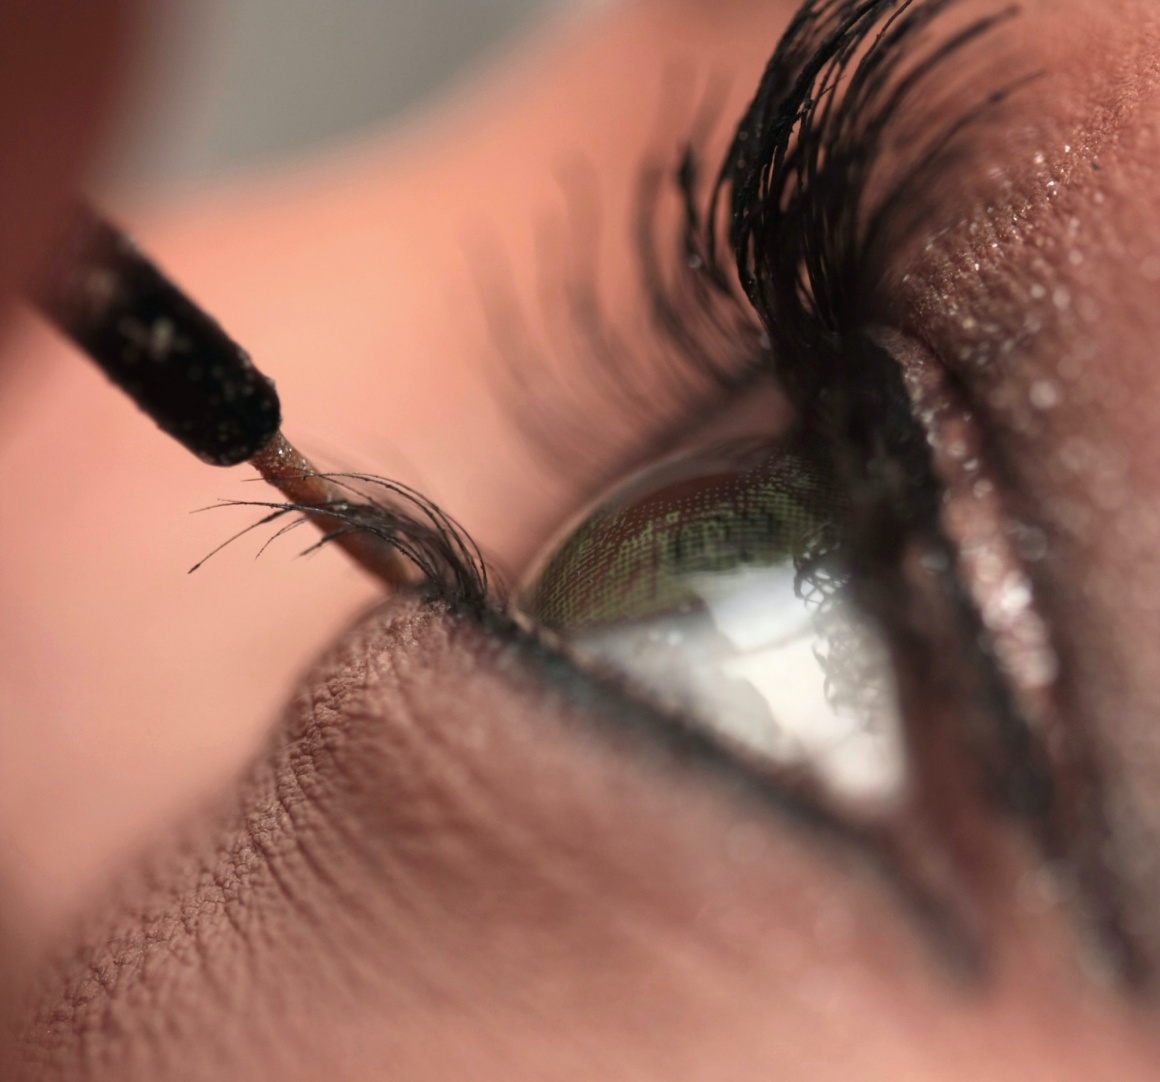 Close up of a woman’s eye applying make-up